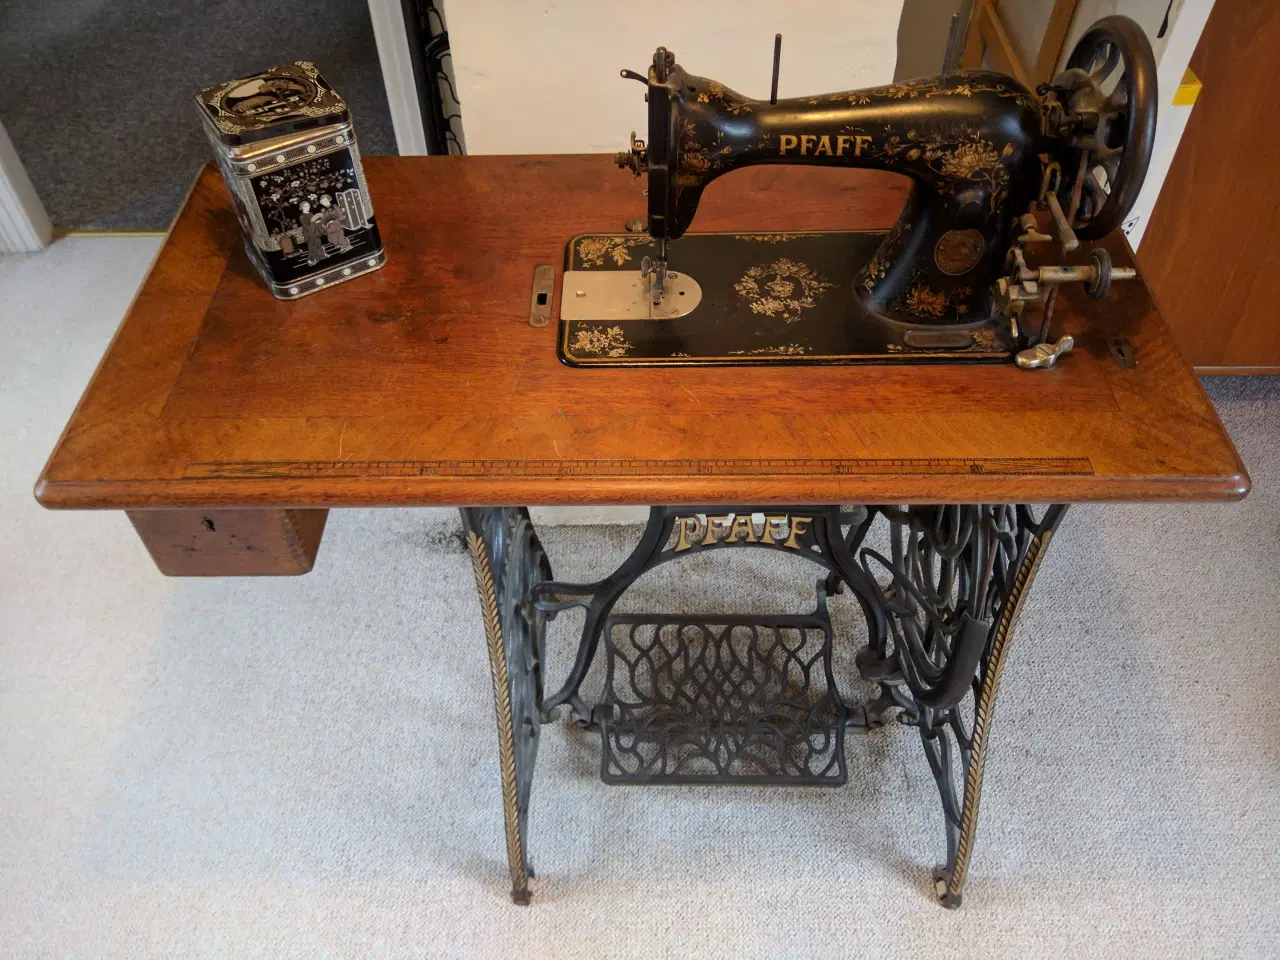 Billede 1 - Gammel Pfaff fodpedal symaskine